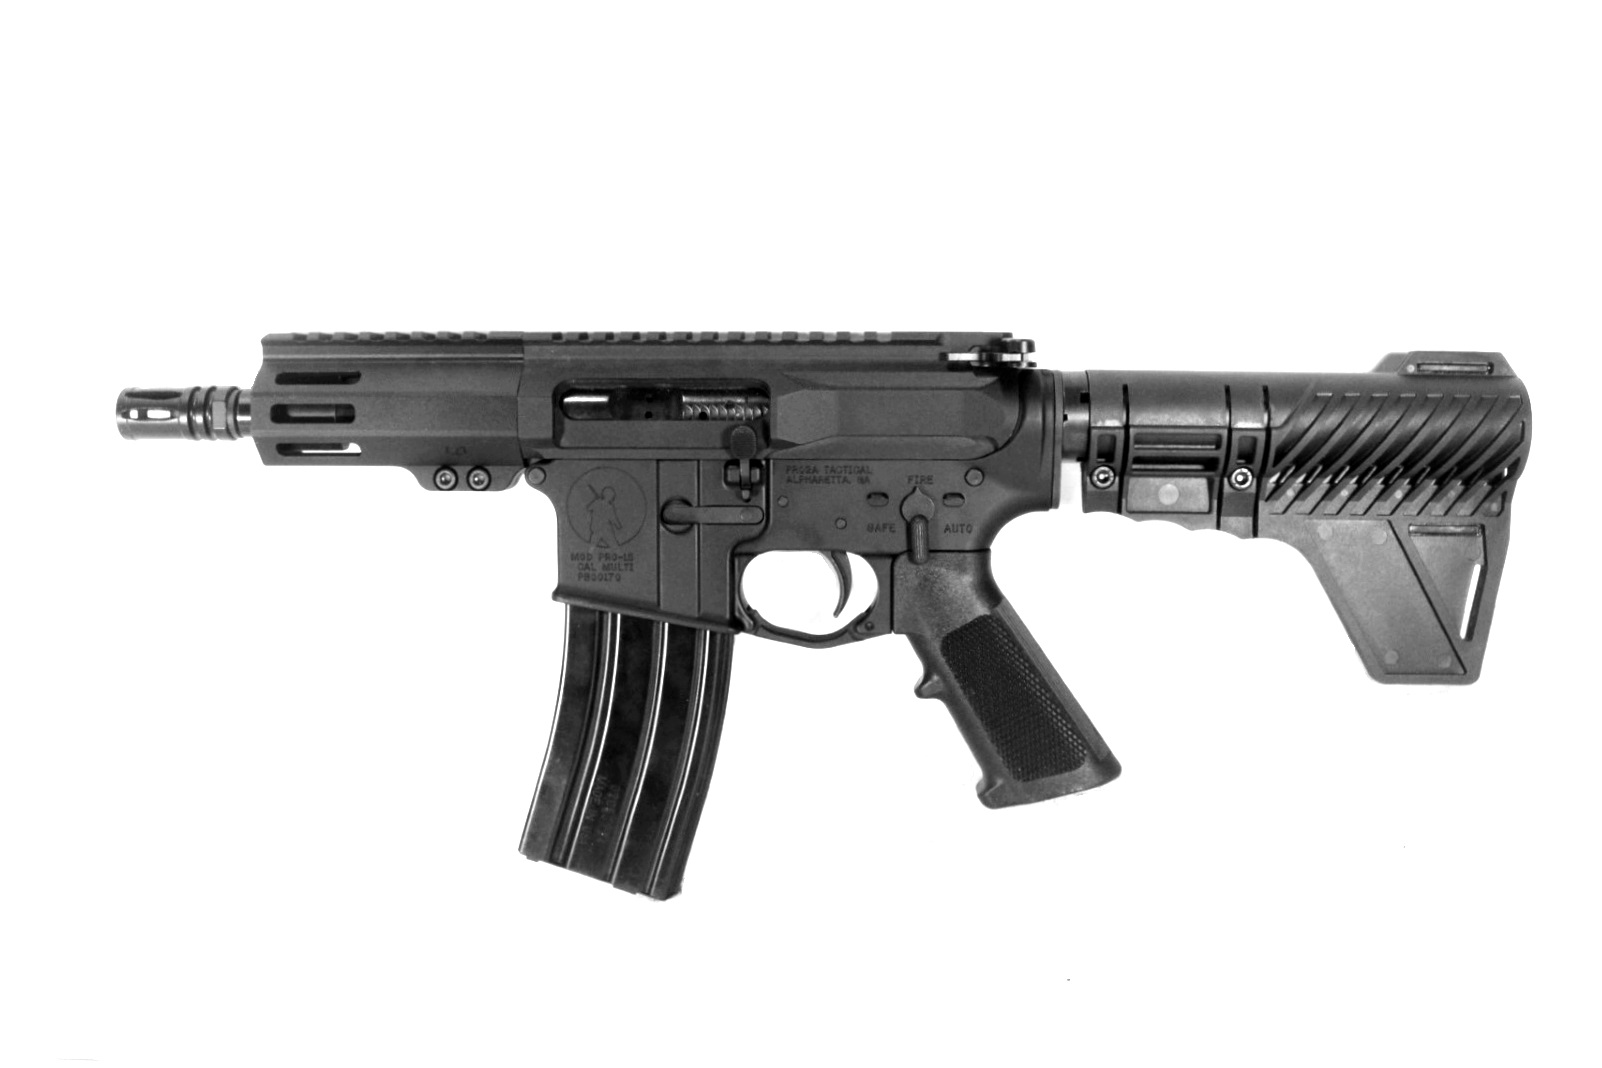 5 inch 300 BLACKOUT AR Pistol | For Suppressors | Left Hand